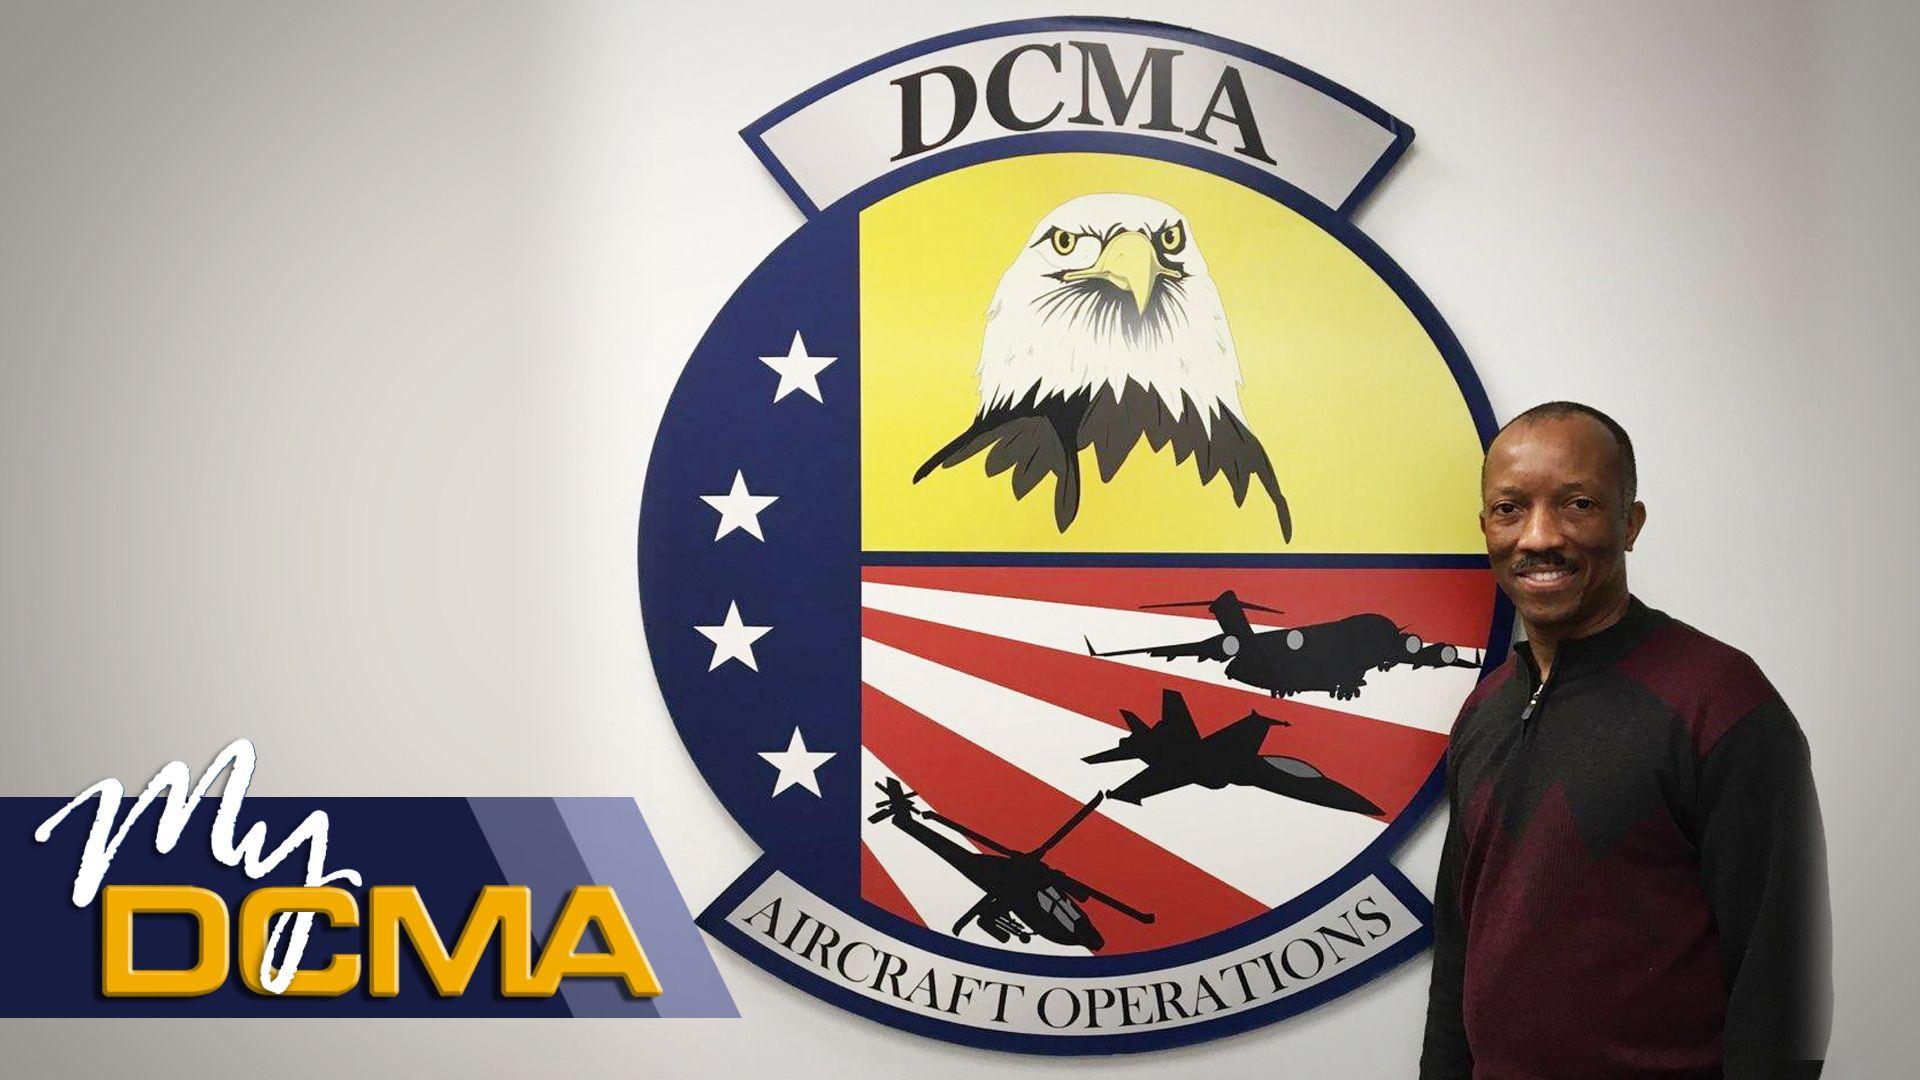 DCMA Logo - Defense Contract Management Agency